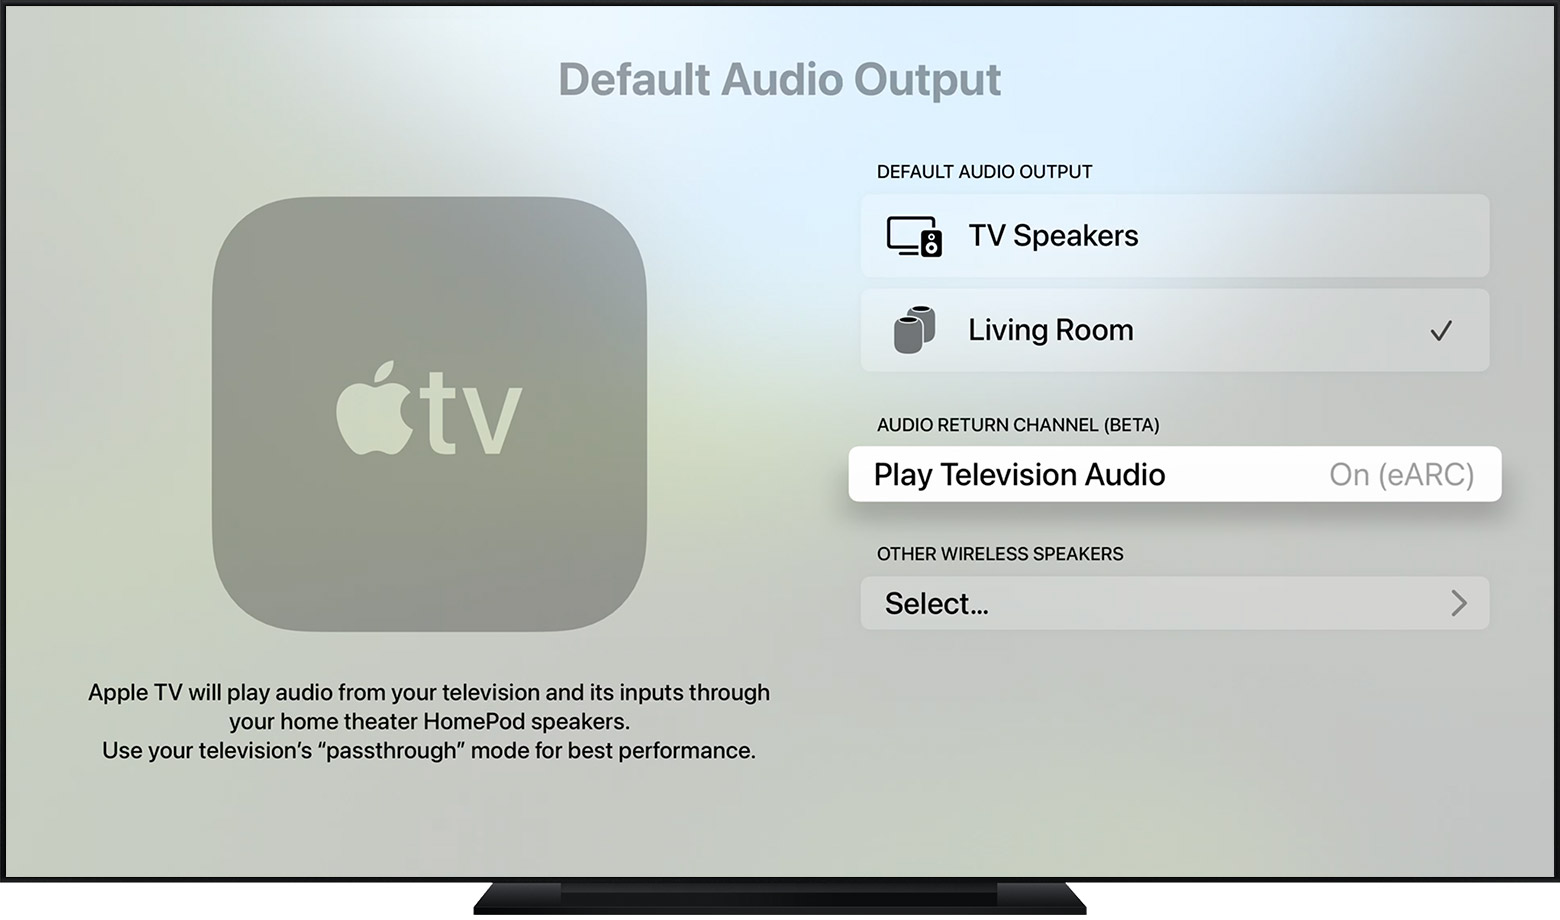 Comprueba la salida de audio de tu Apple TV.